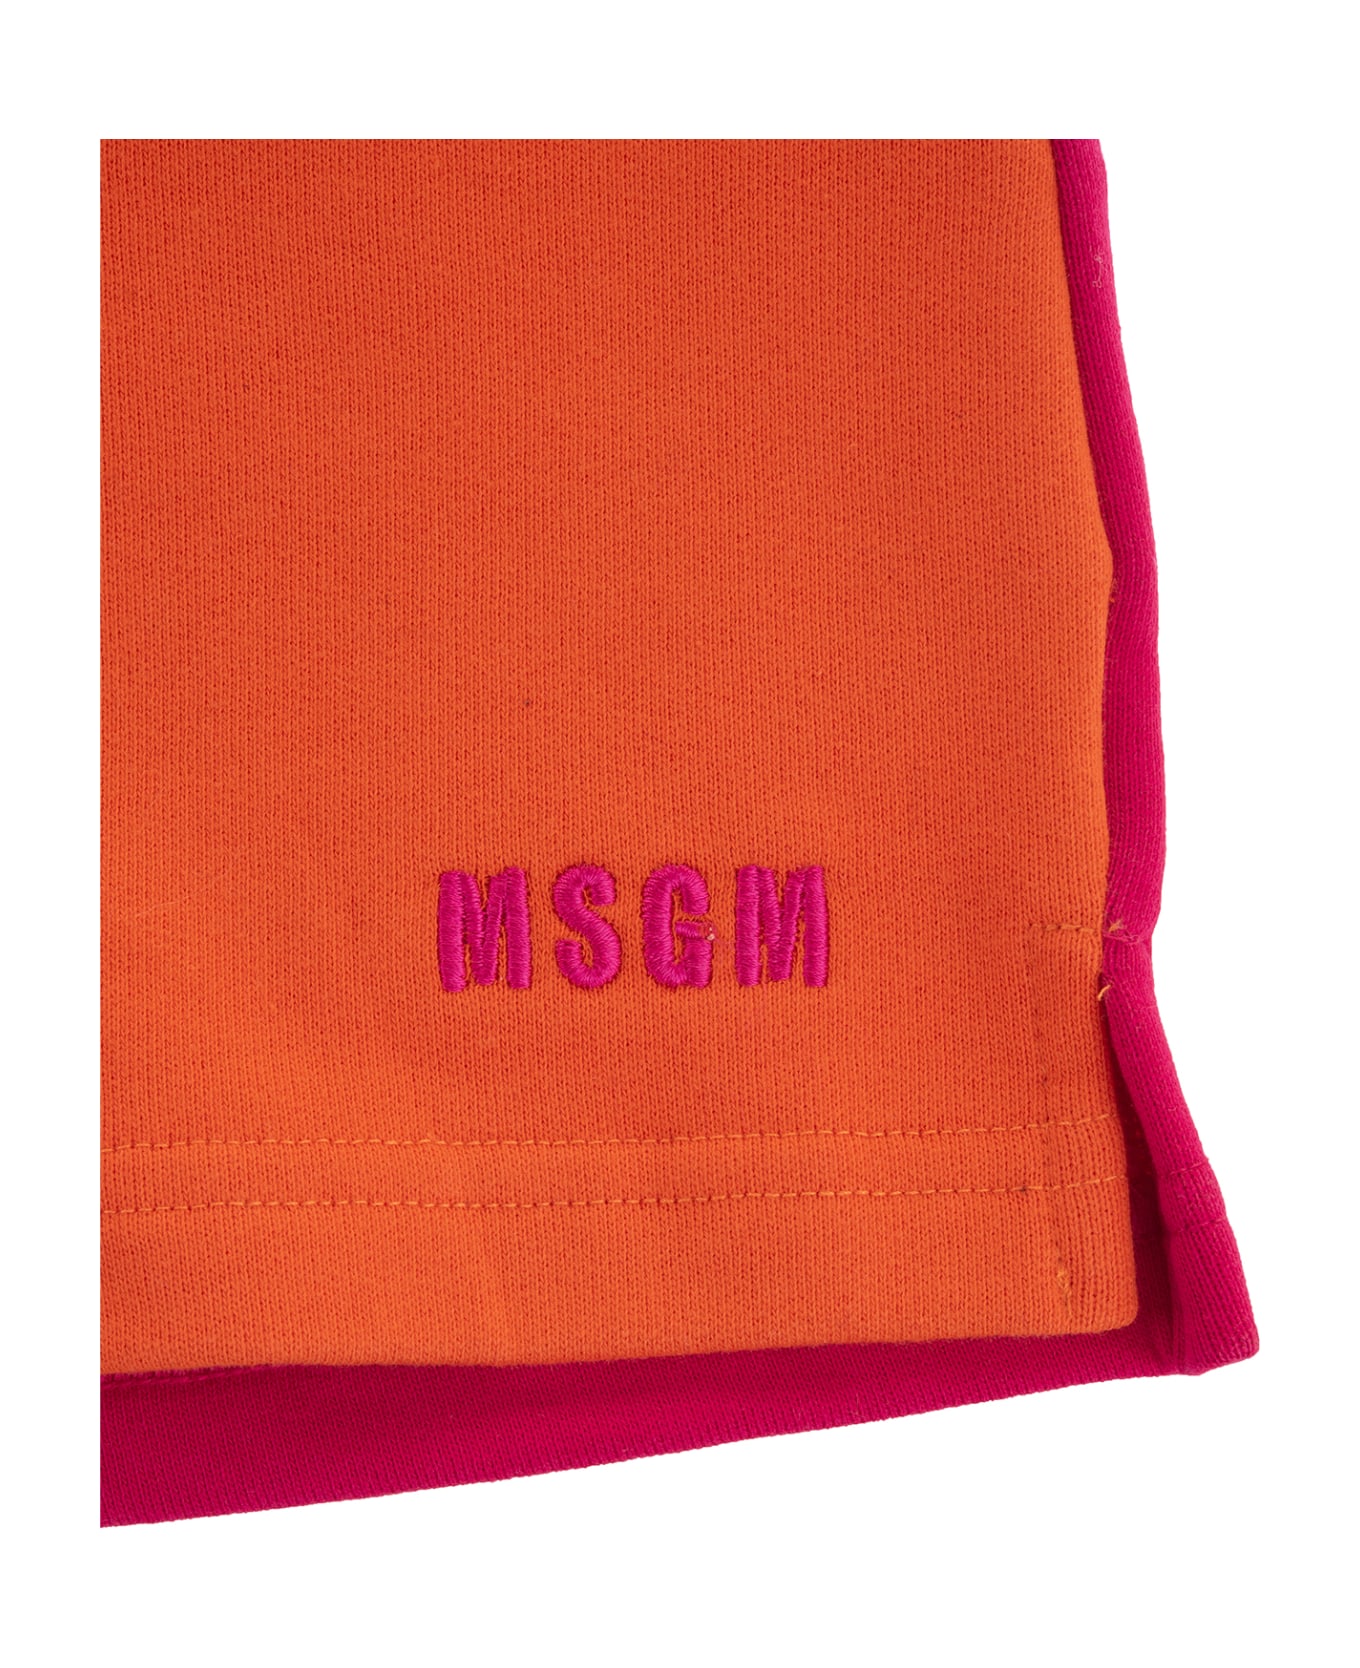 MSGM Sports Cut Shorts In Two Colors - Arancione/fucsia